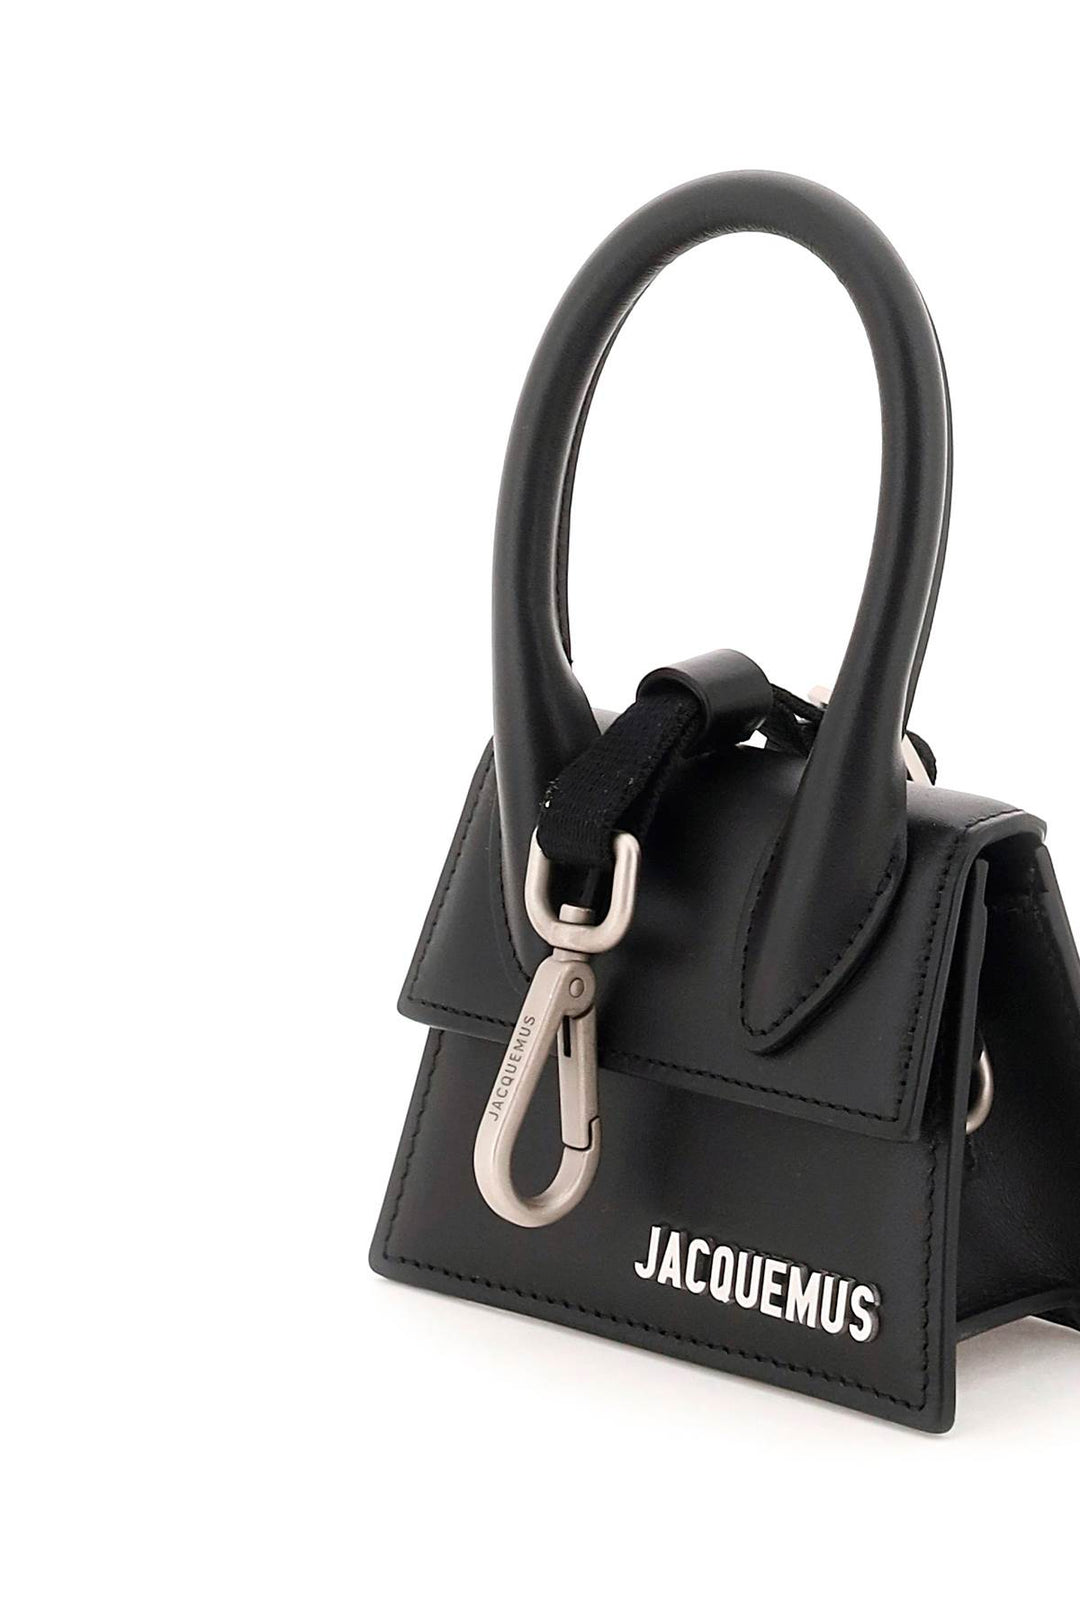 Jacquemus Le Chiquito Mini Bag   Black